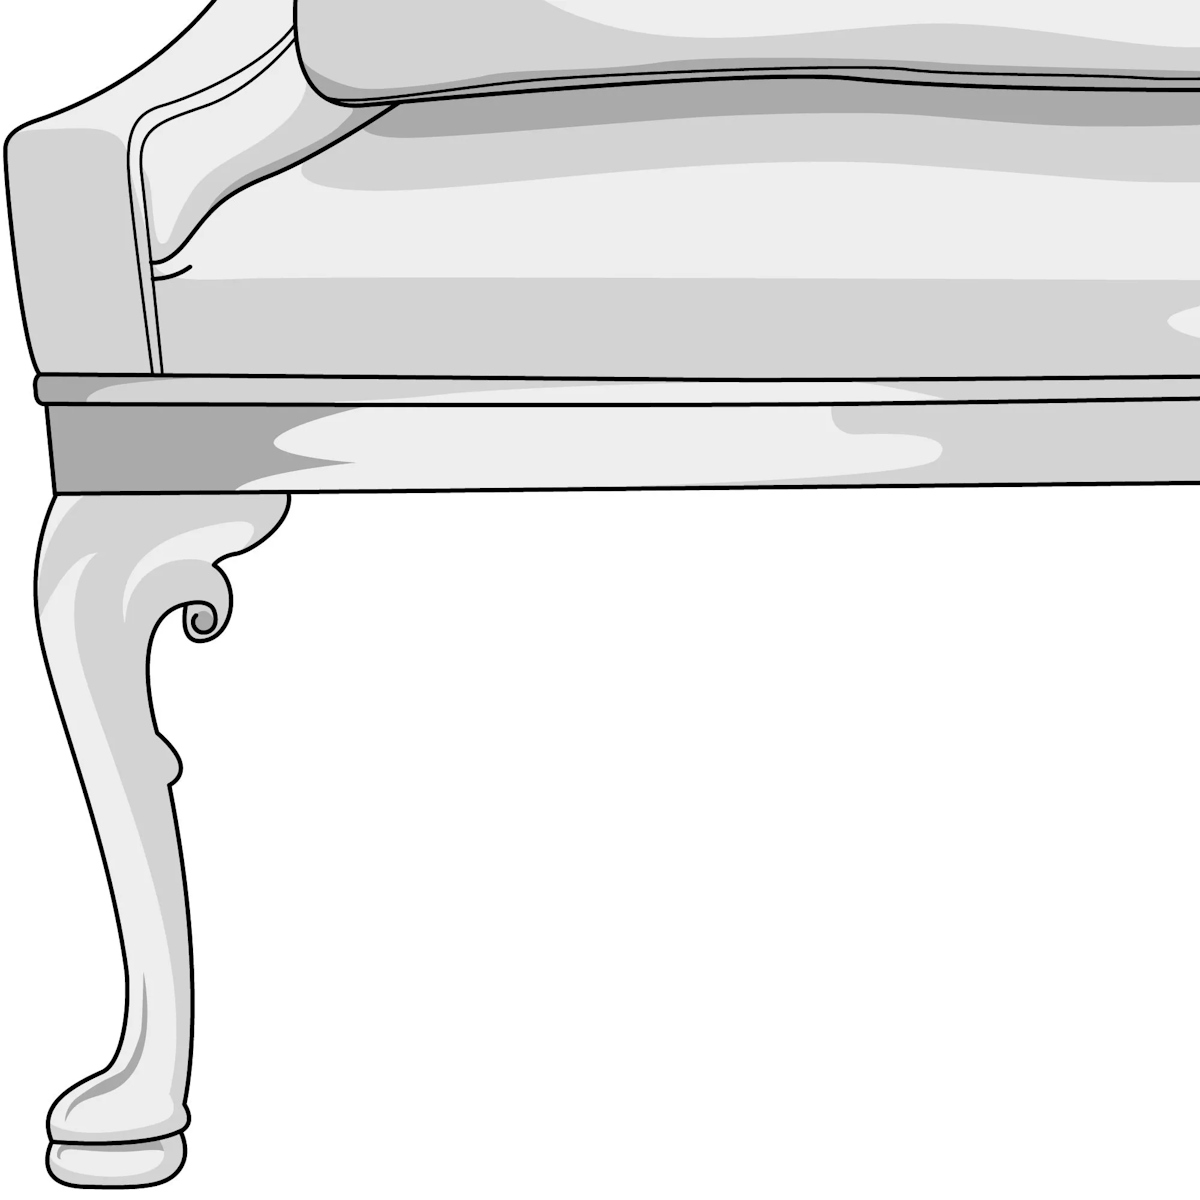 Illustration of club foot style sofa